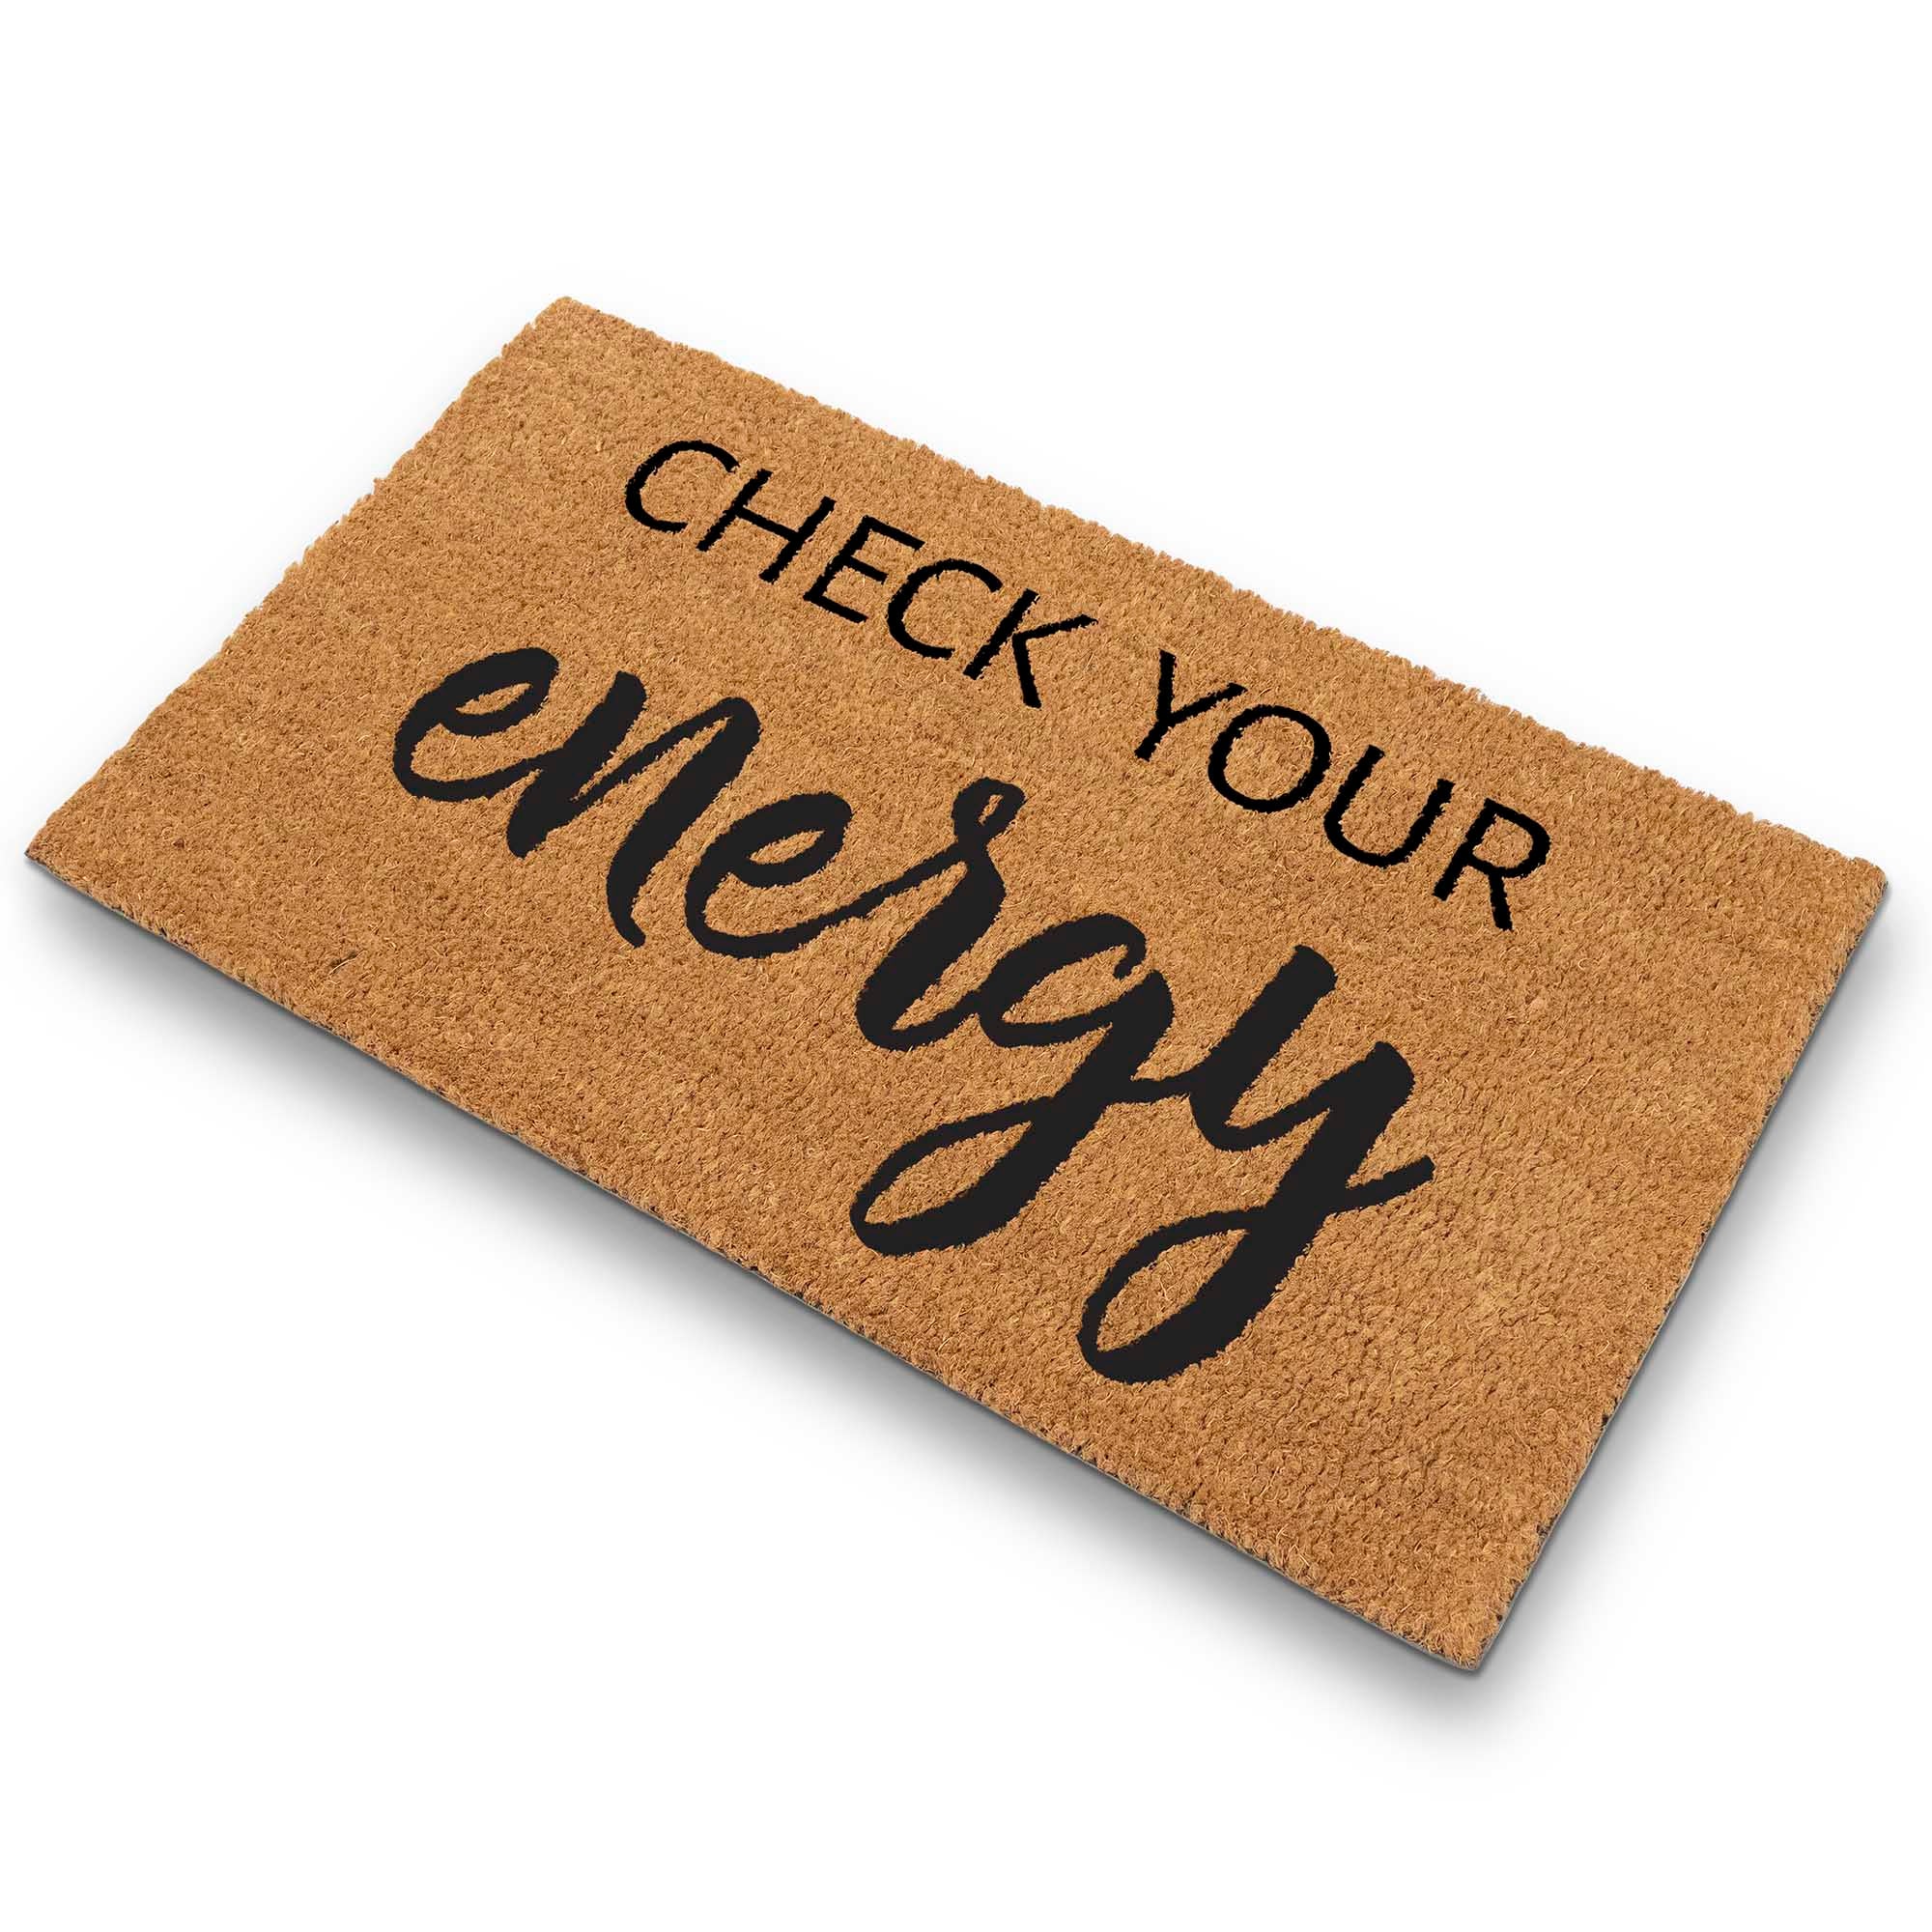 Coir Mat Check Your Energy